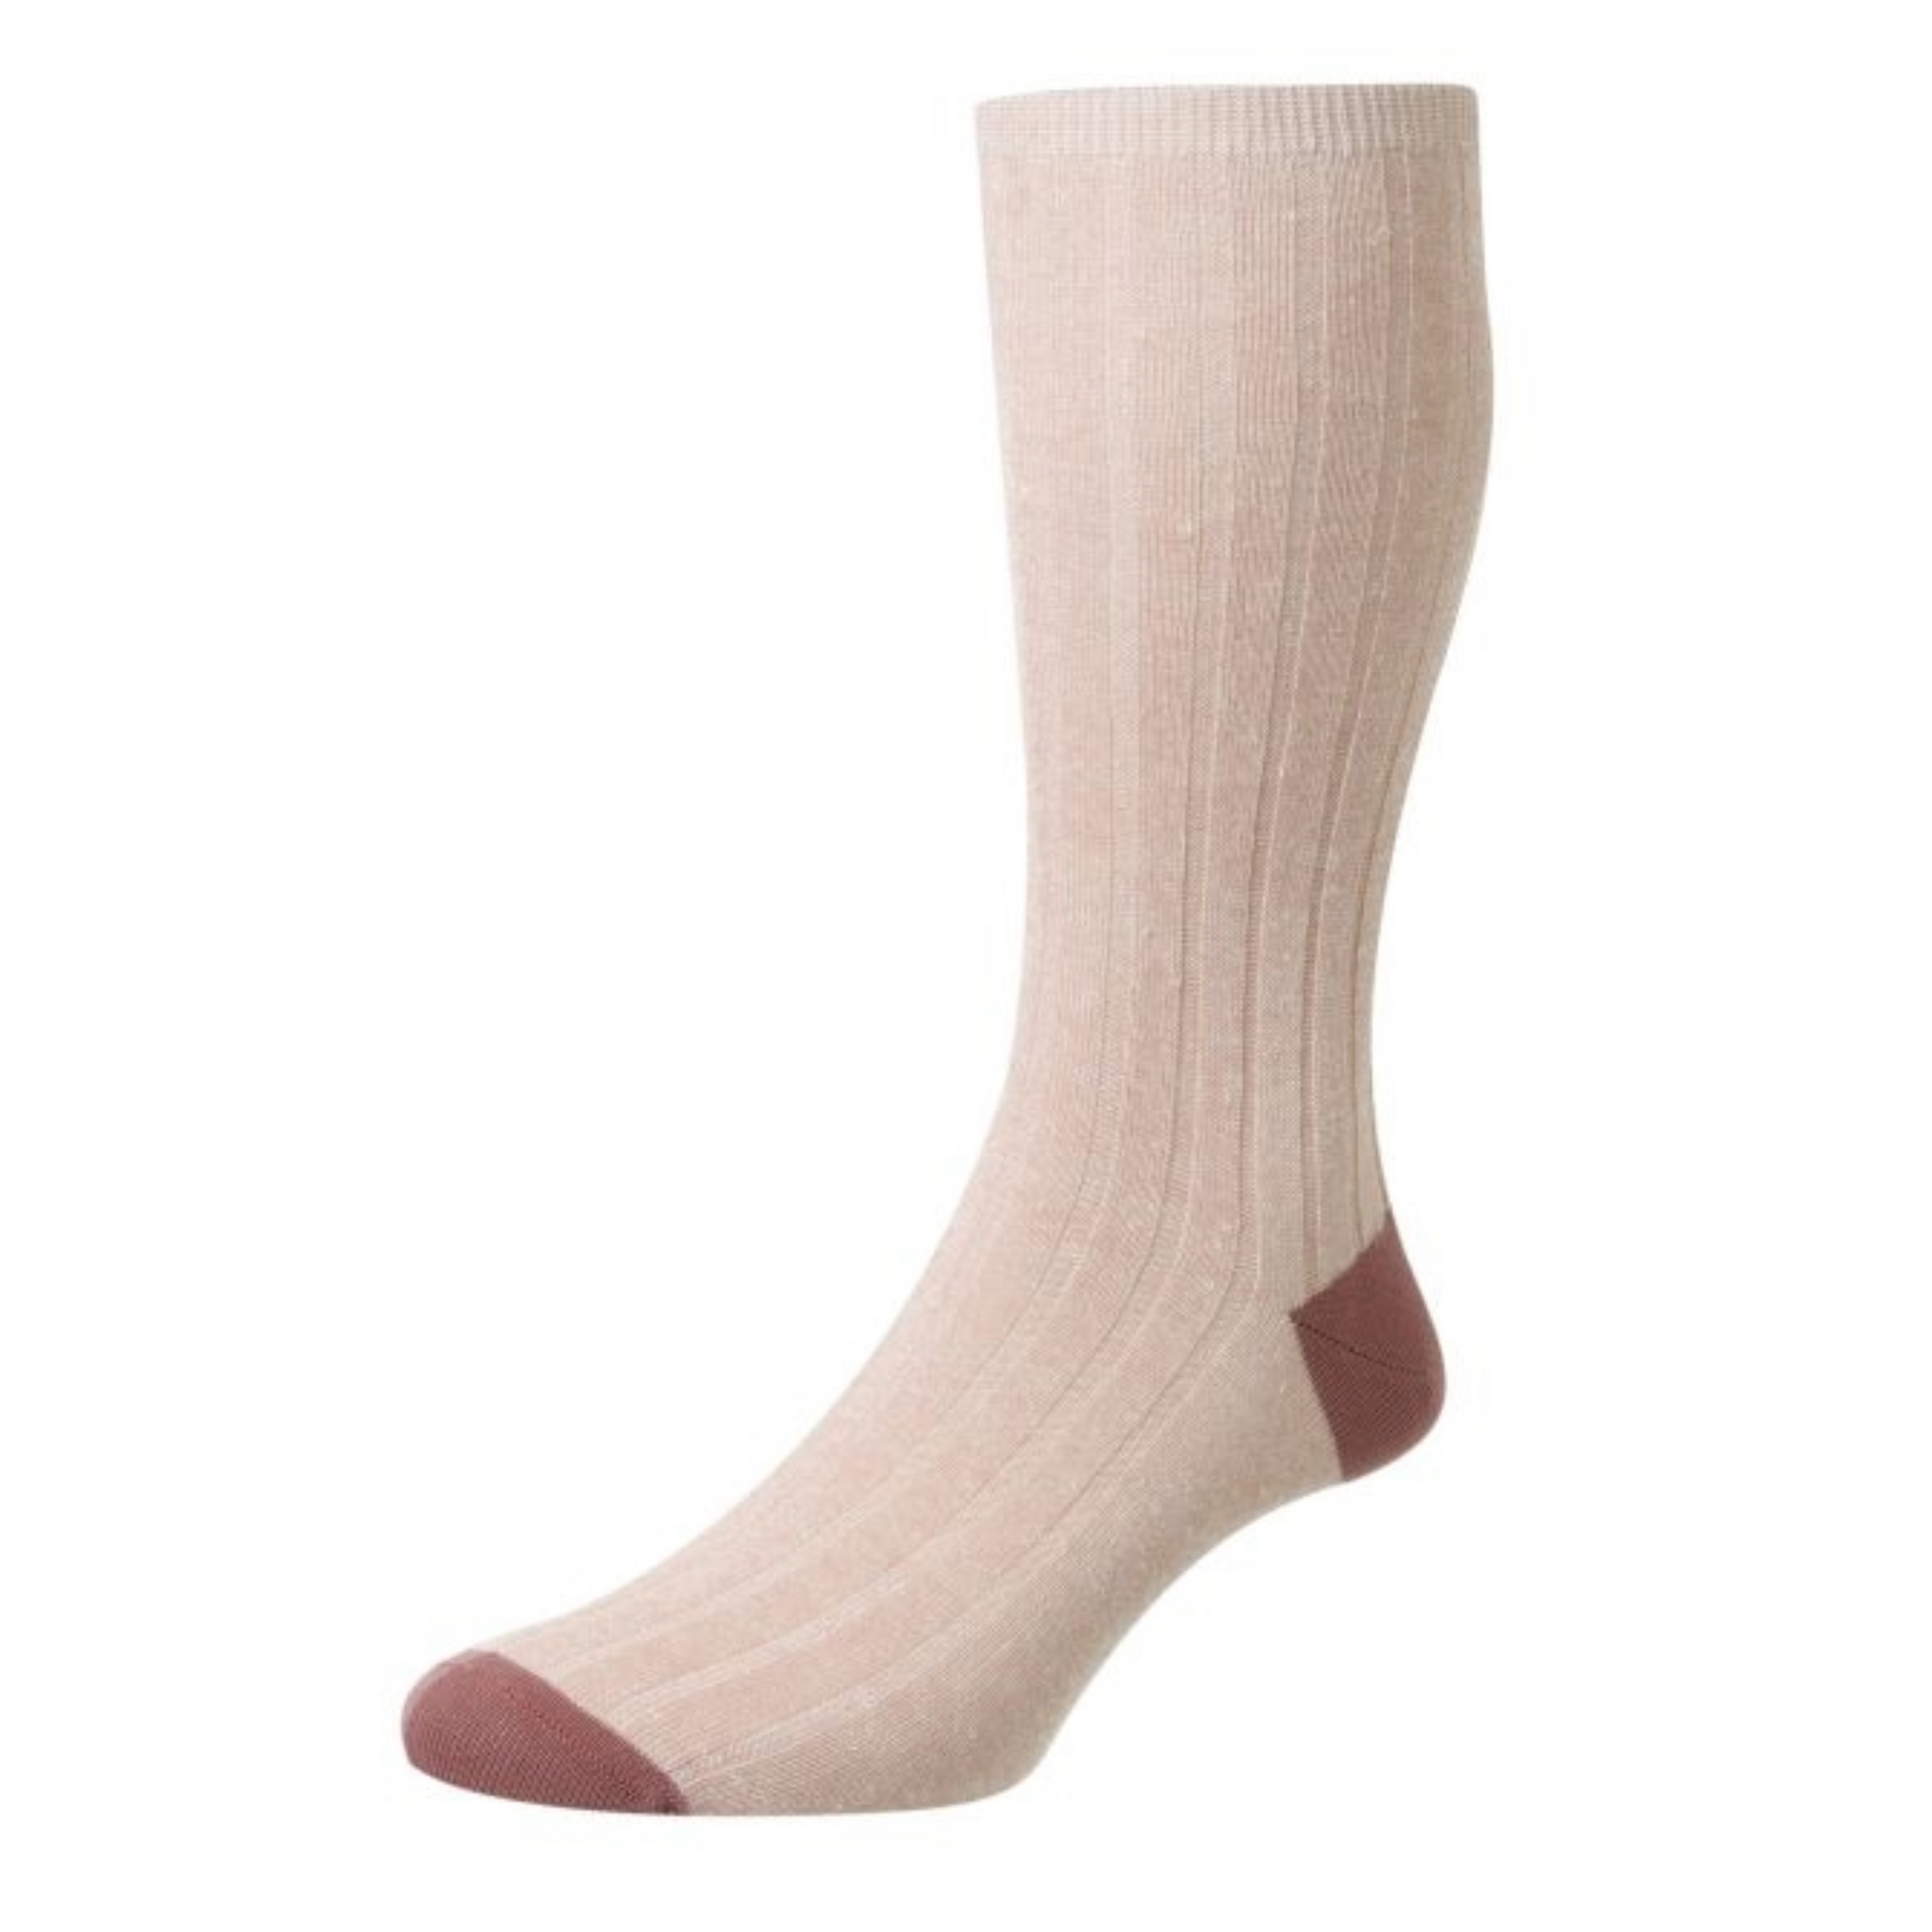 Pantherella - Socks - Hamada - Linen & Cotton - Pale Pink